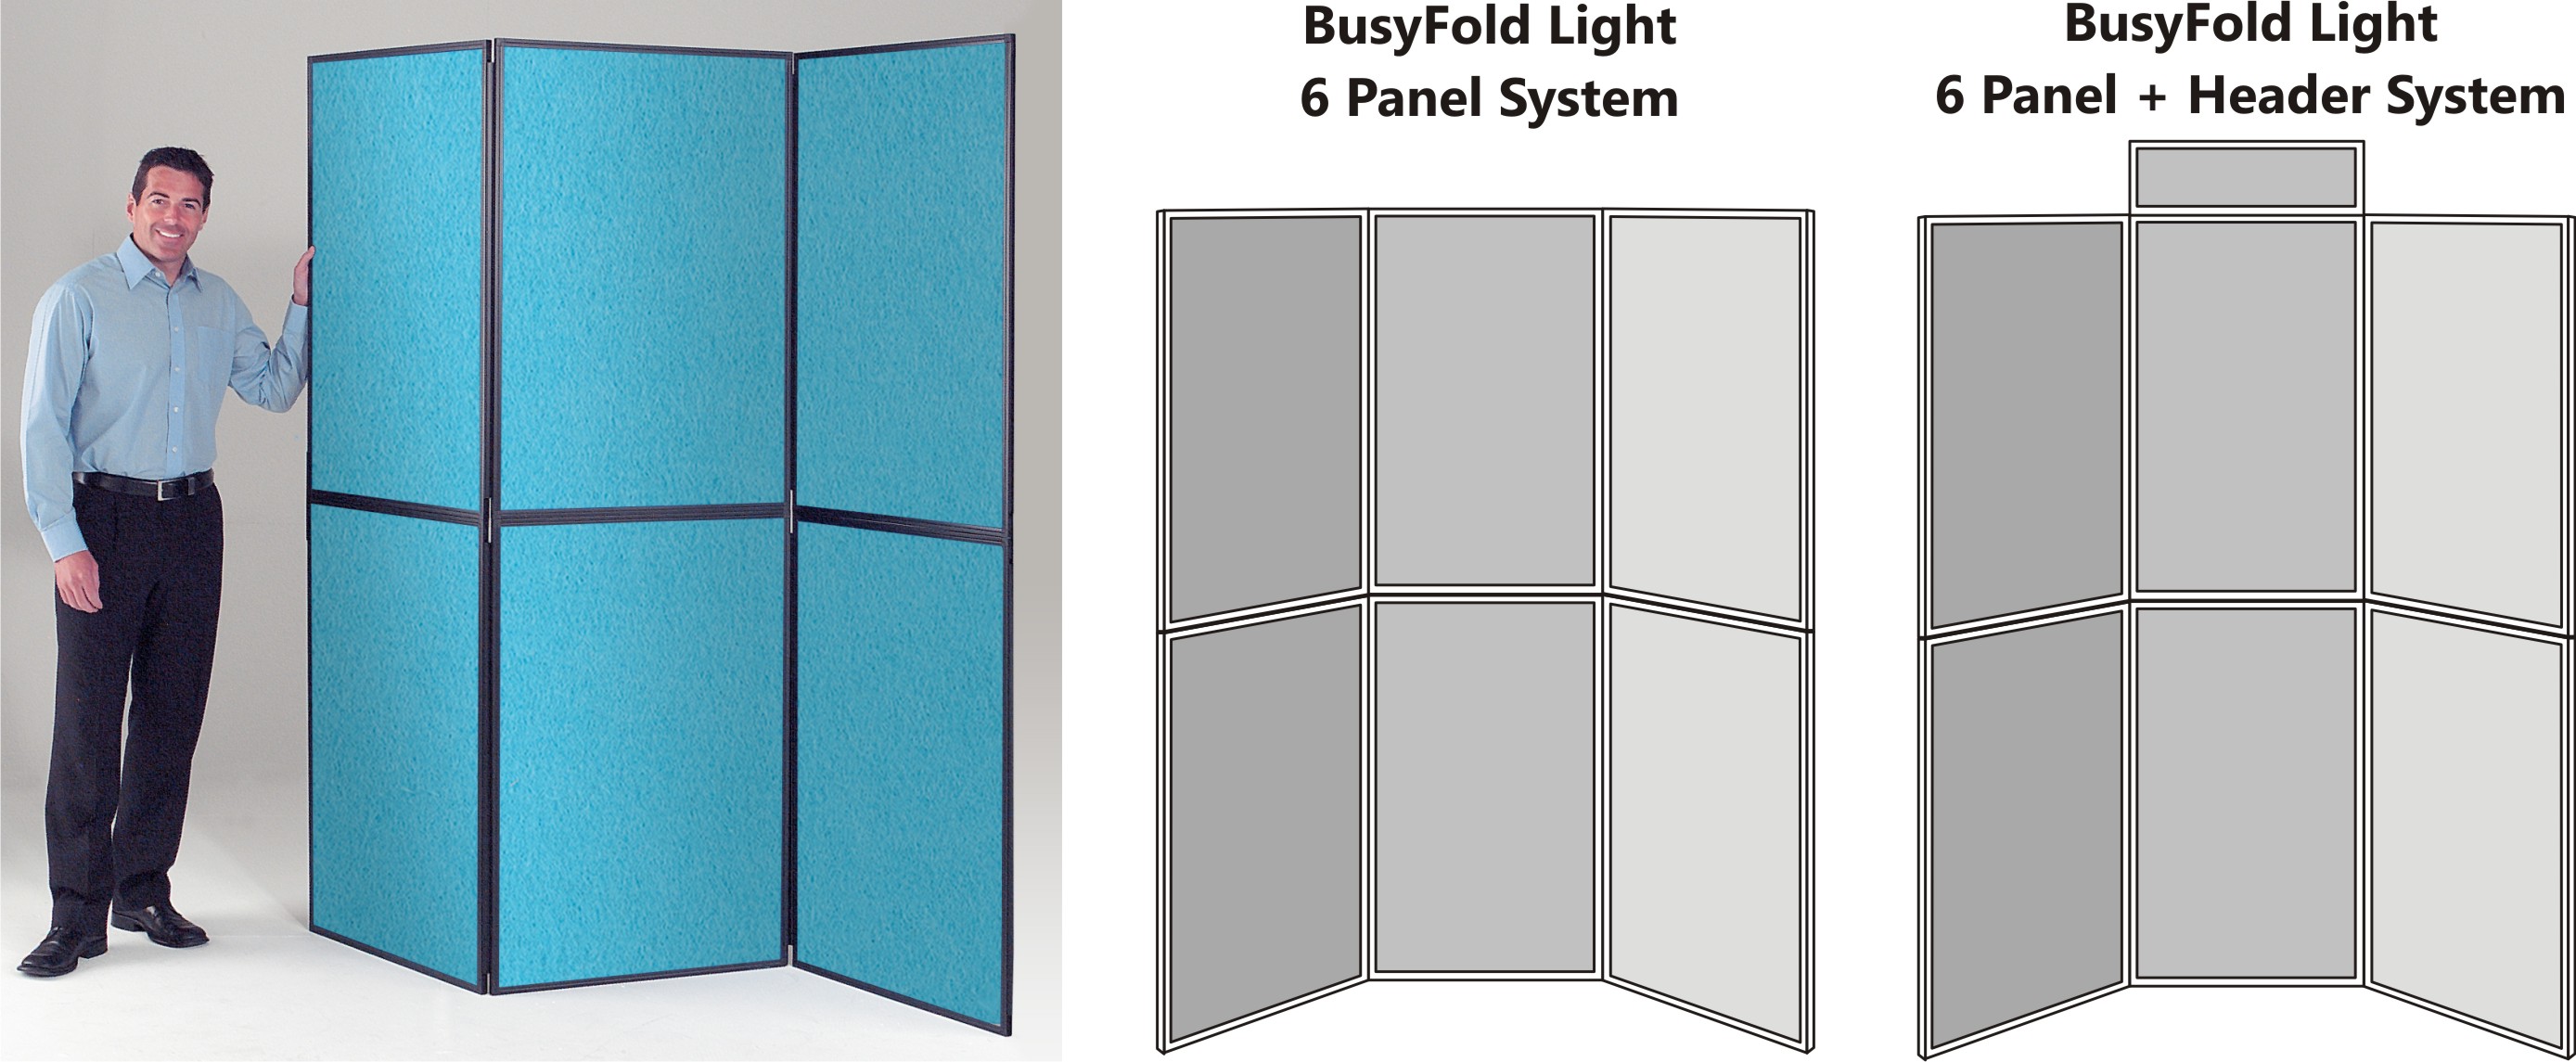 BusyFold Light XL 6 Panel Display System